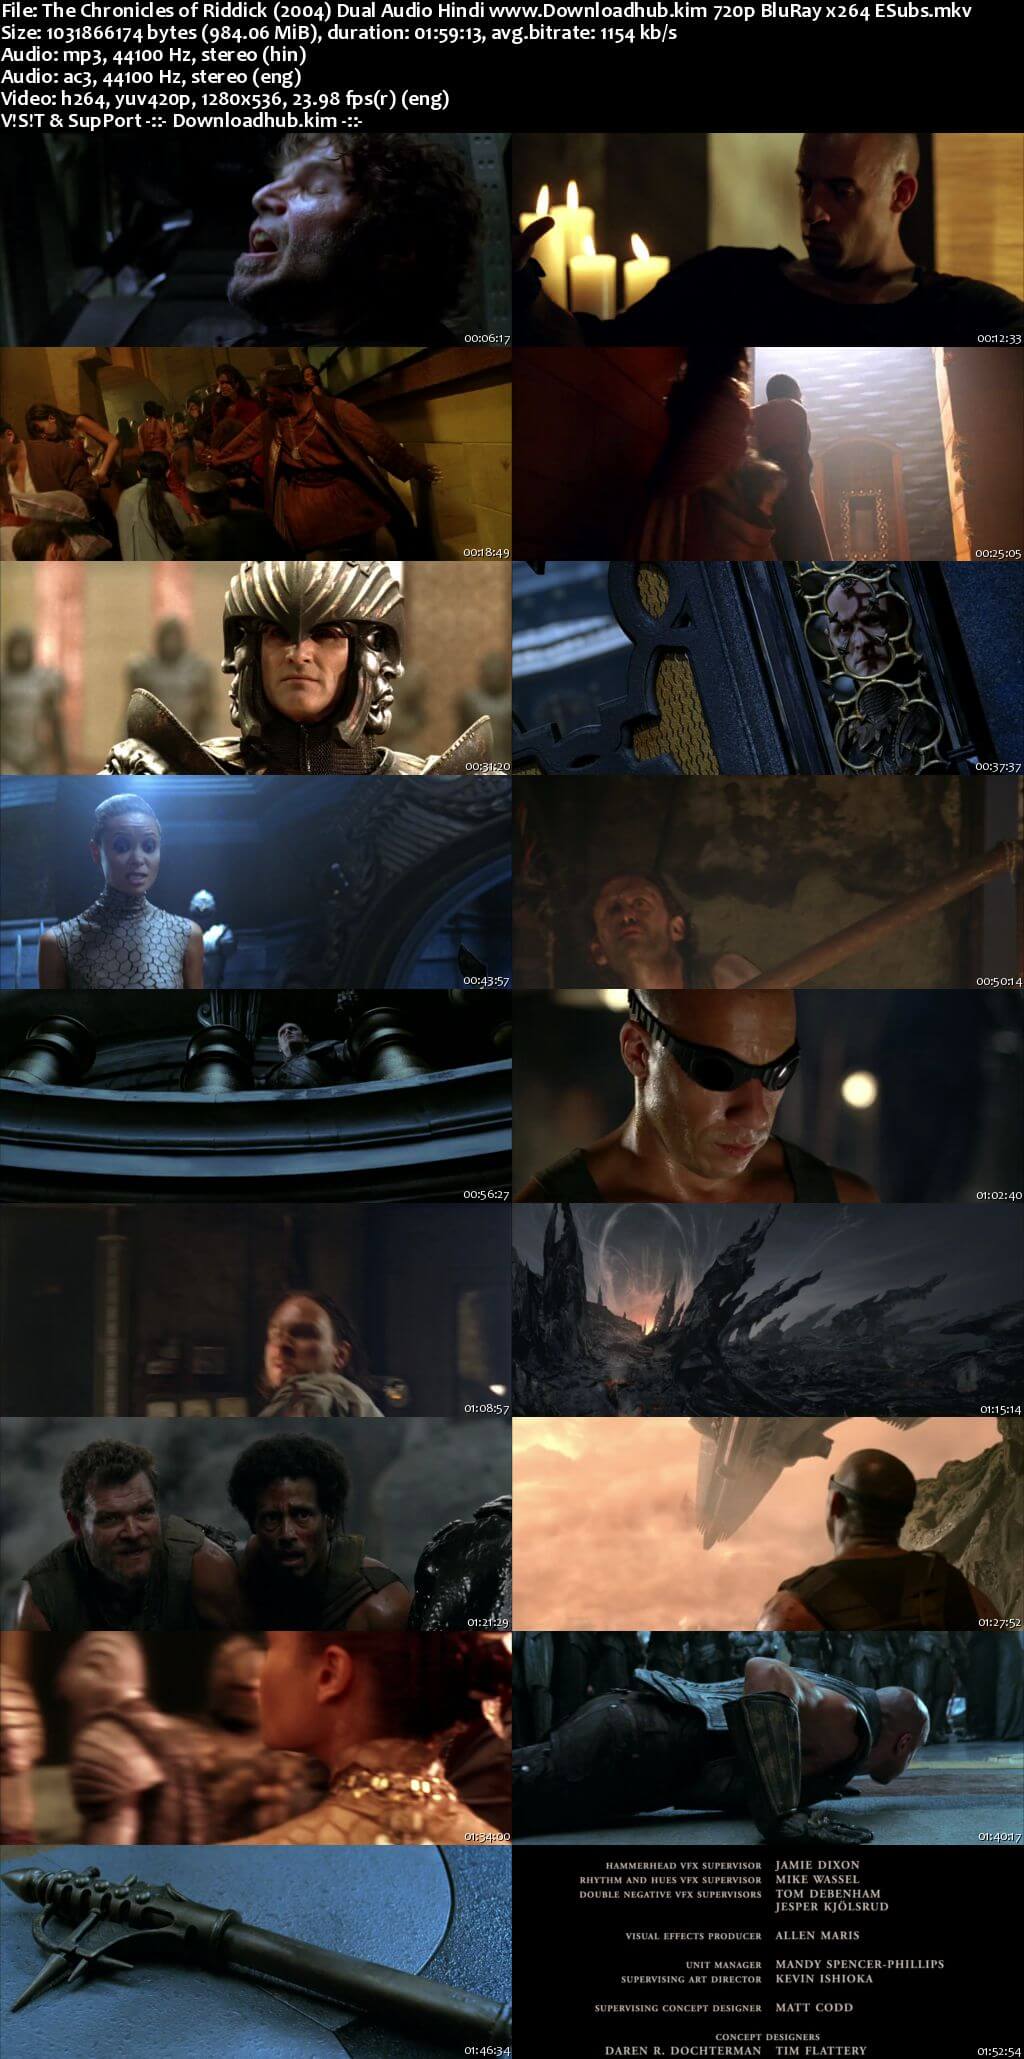 The Chronicles of Riddick 2004 Hindi Dual Audio 720p BluRay ESubs